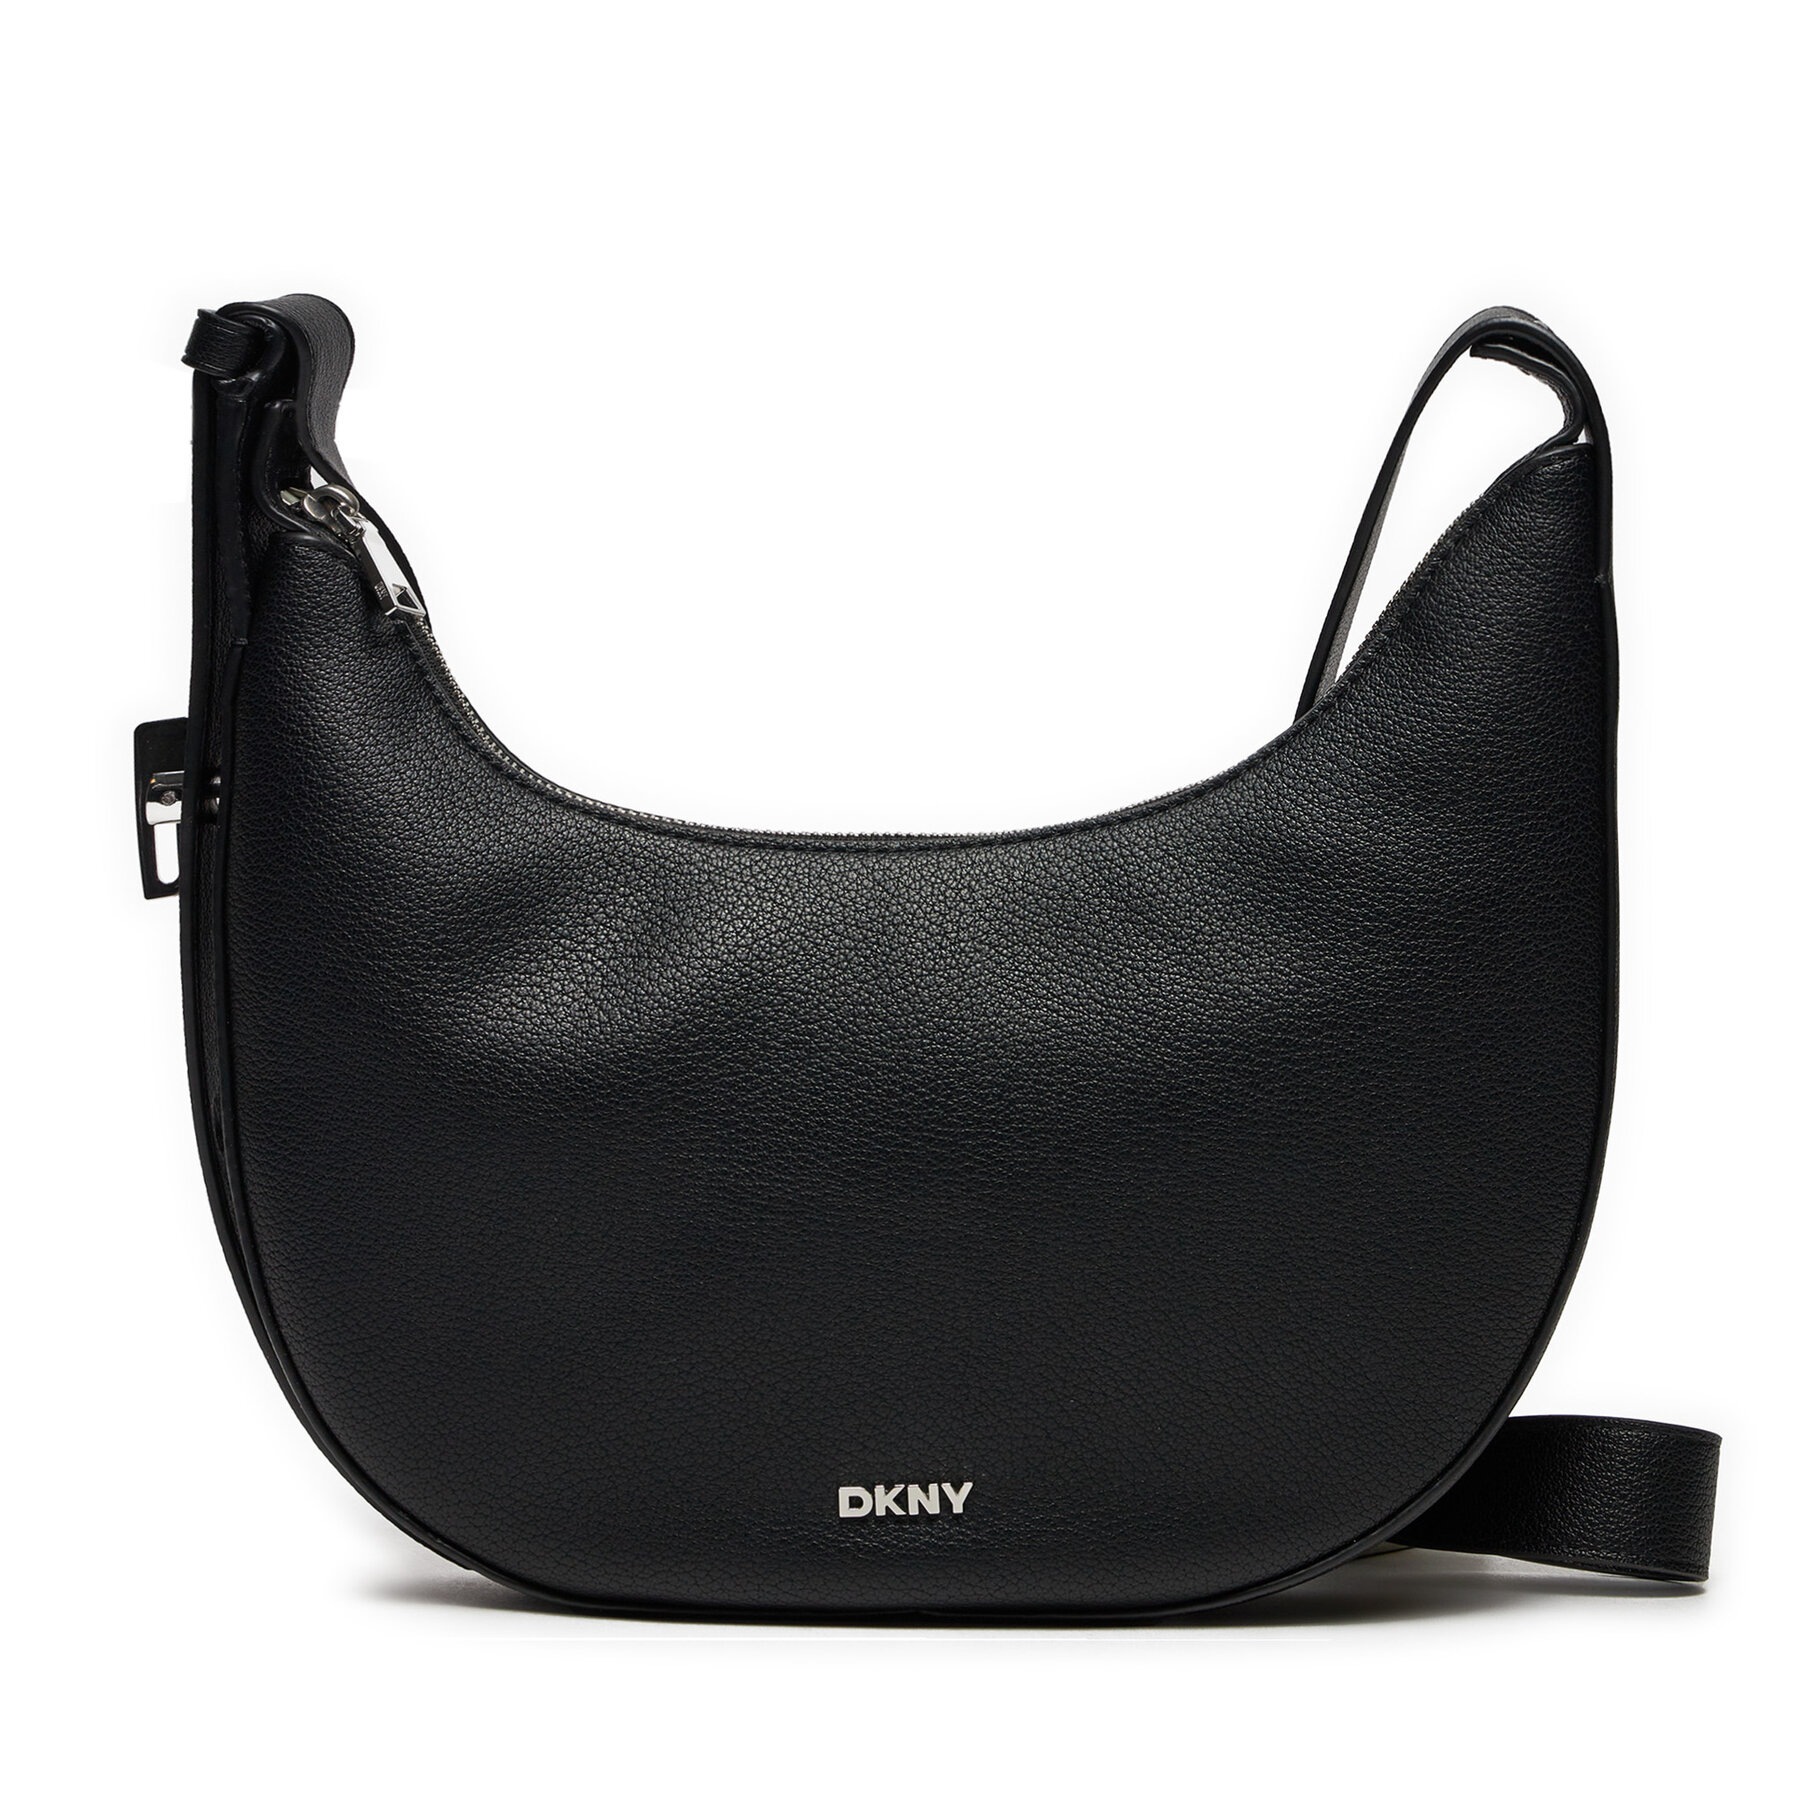 Handtasche DKNY Bleeker Crossbody R41EKC51 Black/Silver BSV von DKNY